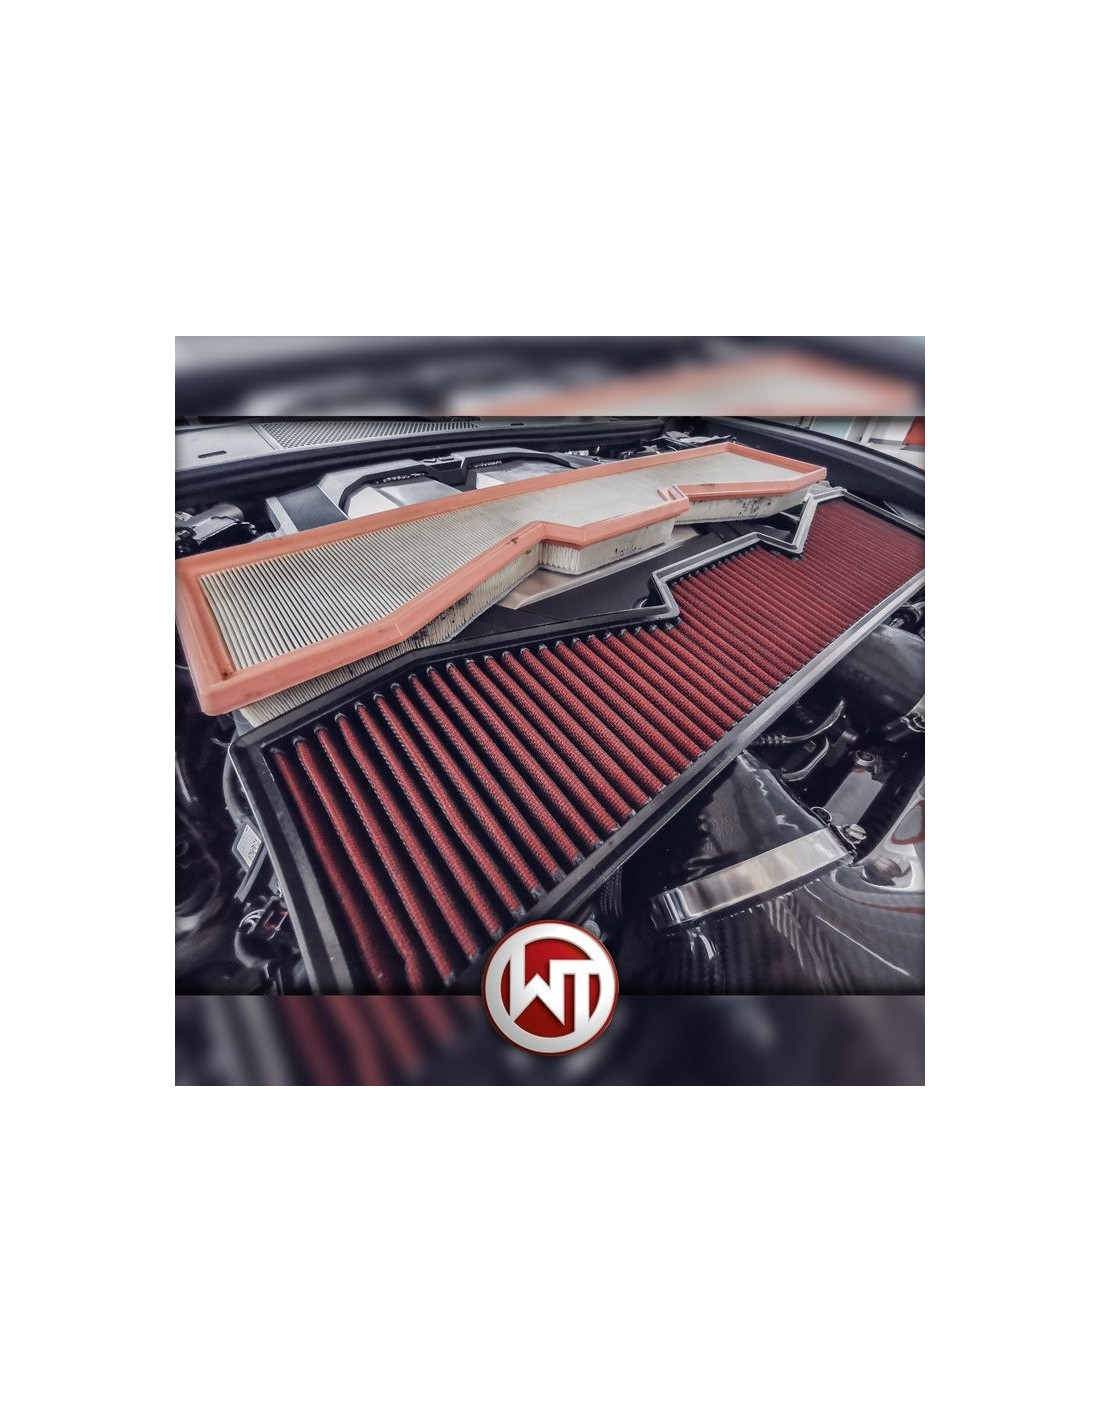 PowerControl: Audi A6 (C8) - Sound & Tuning Garage Stefan Löber GmbH